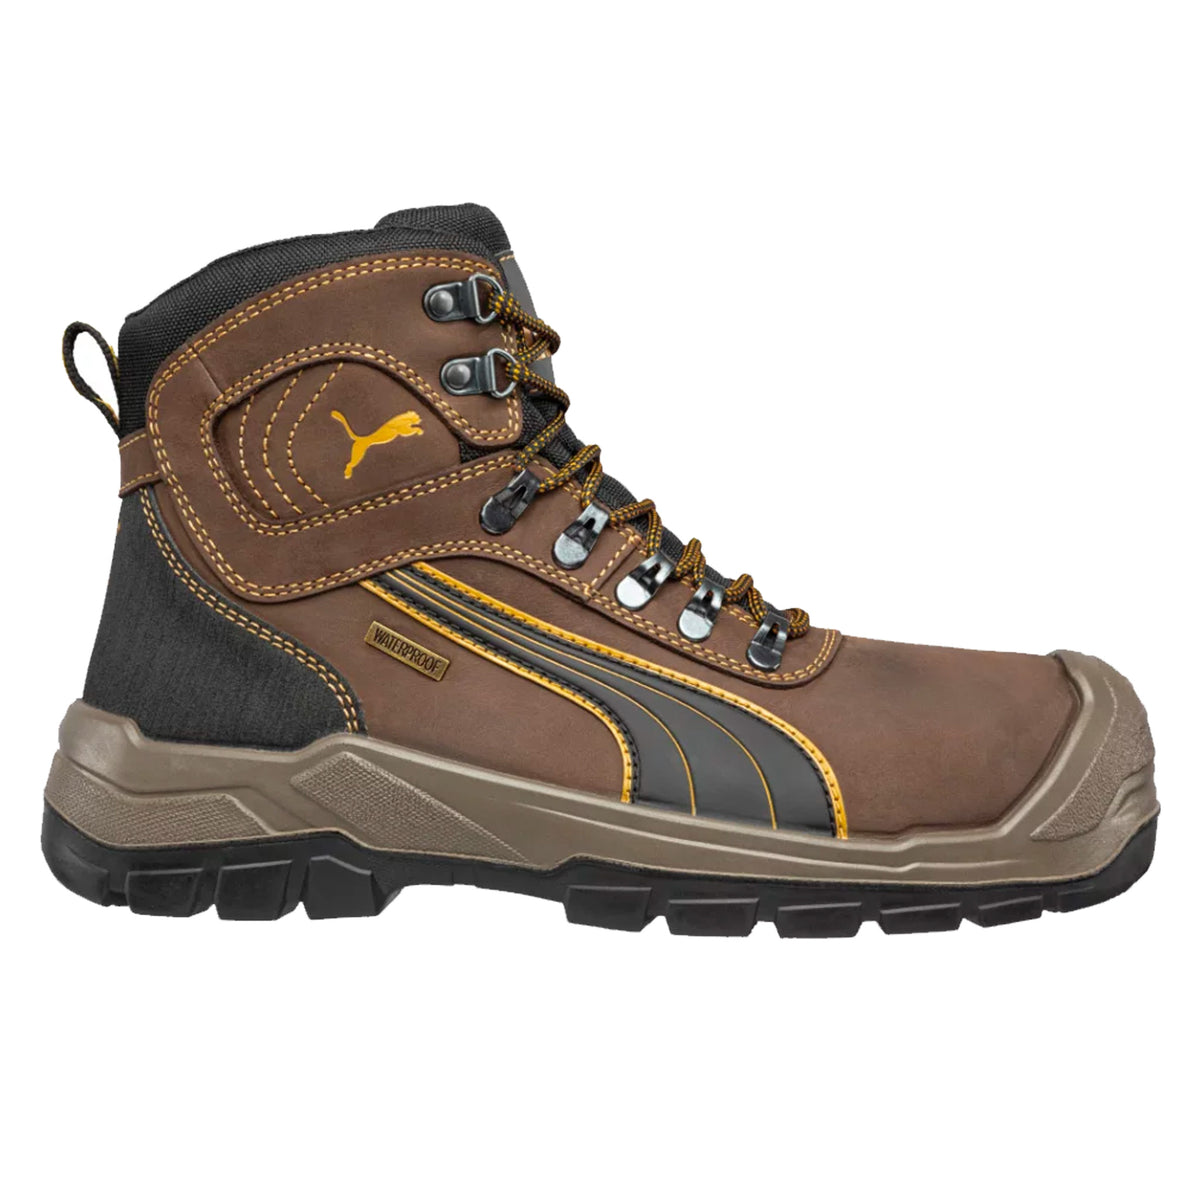 sierra nevada mid brown boot with zip